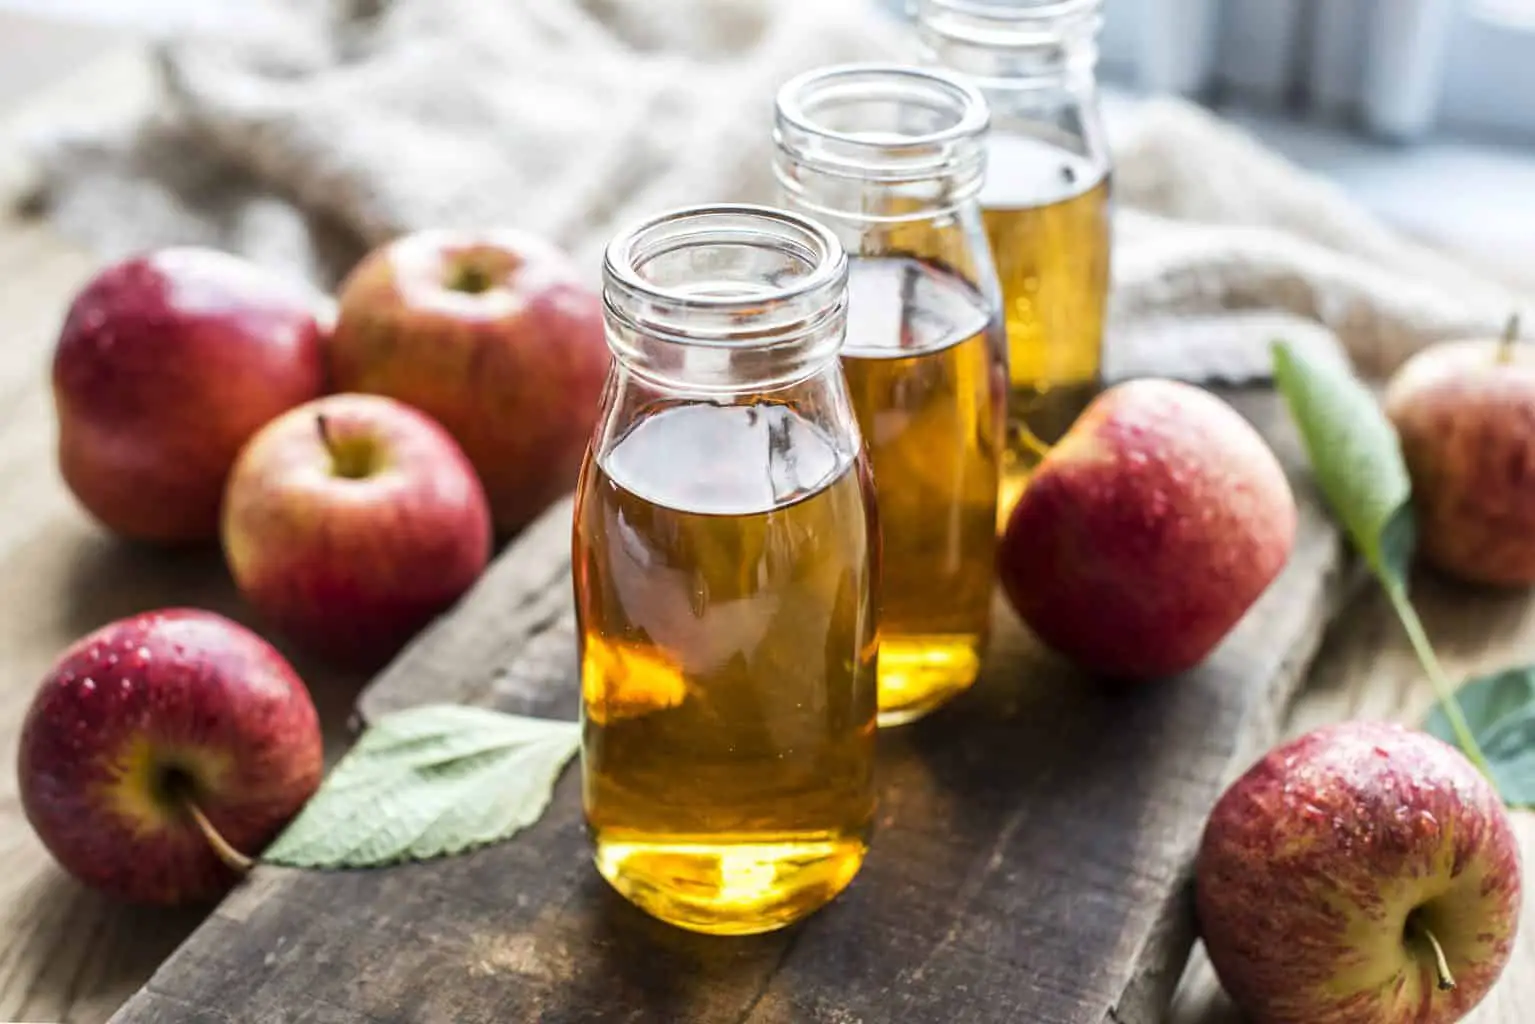 vinegar with apples